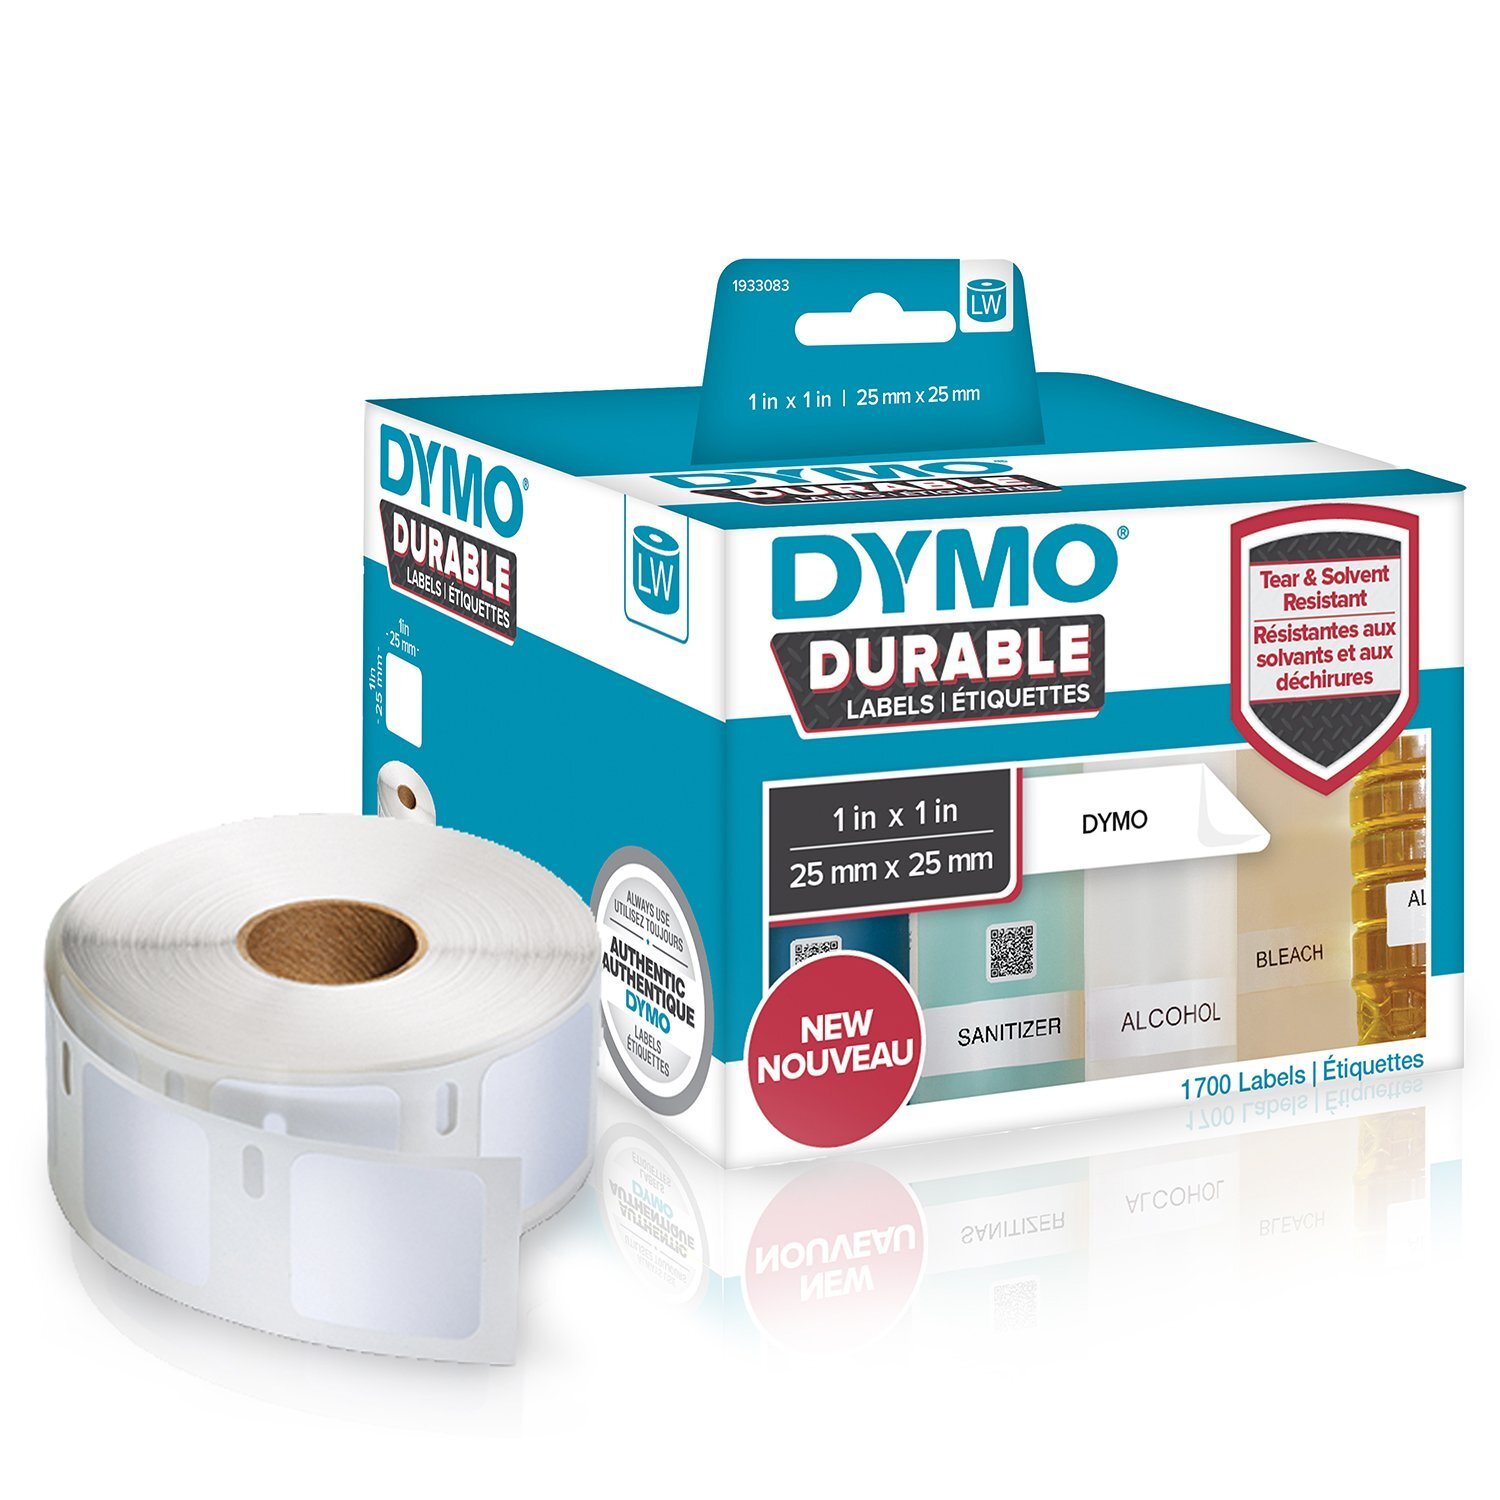 DYMO LW - LW duurzame labels - 25 x 25 mm - 1933083